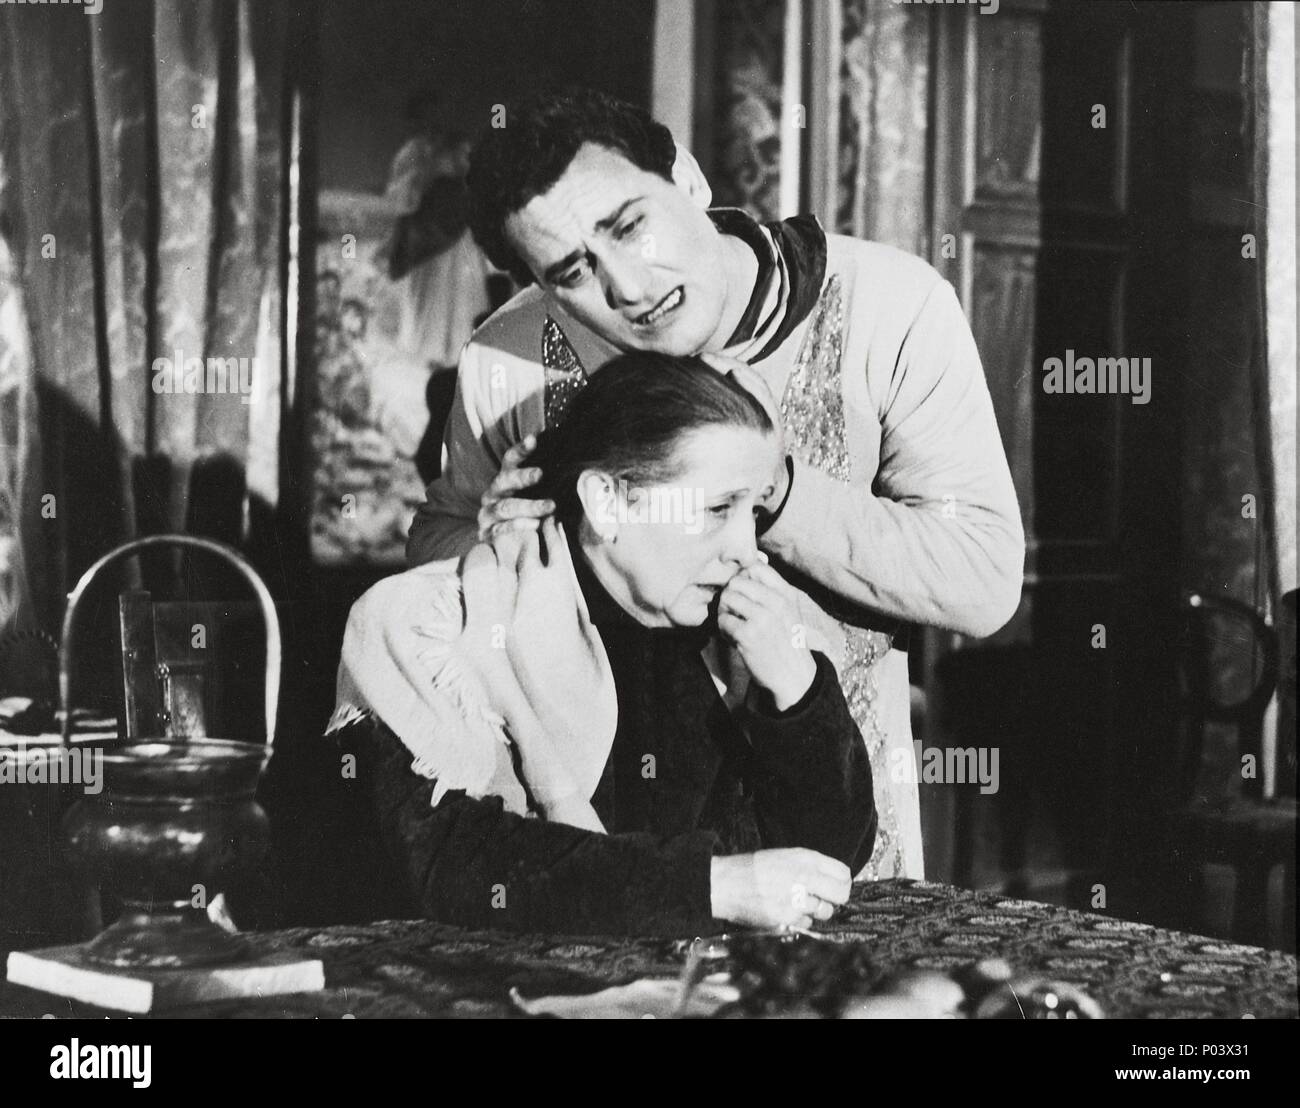 Original Film Title: I VITELLONI. English Title: VITELLONI. Film Director: FEDERICO  FELLINI. Year: 1953. Stars: ALBERTO SORDI. Credit: PEG-FILMS / Album Stock  Photo - Alamy